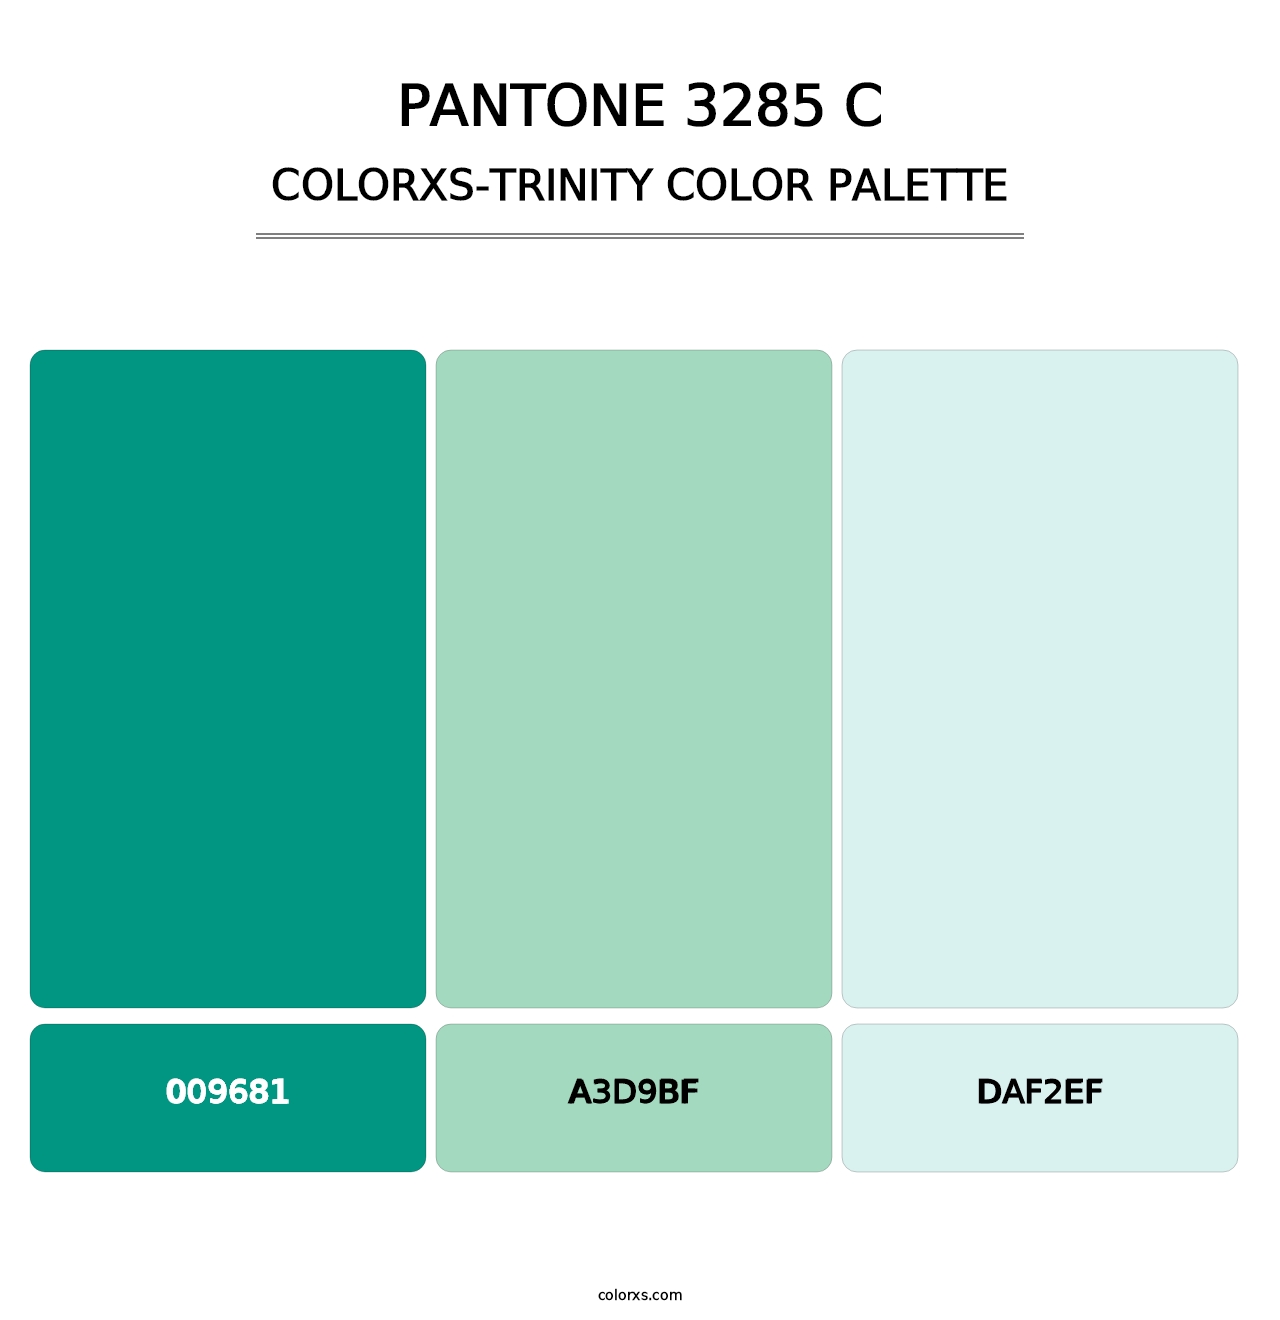 PANTONE 3285 C - Colorxs Trinity Palette